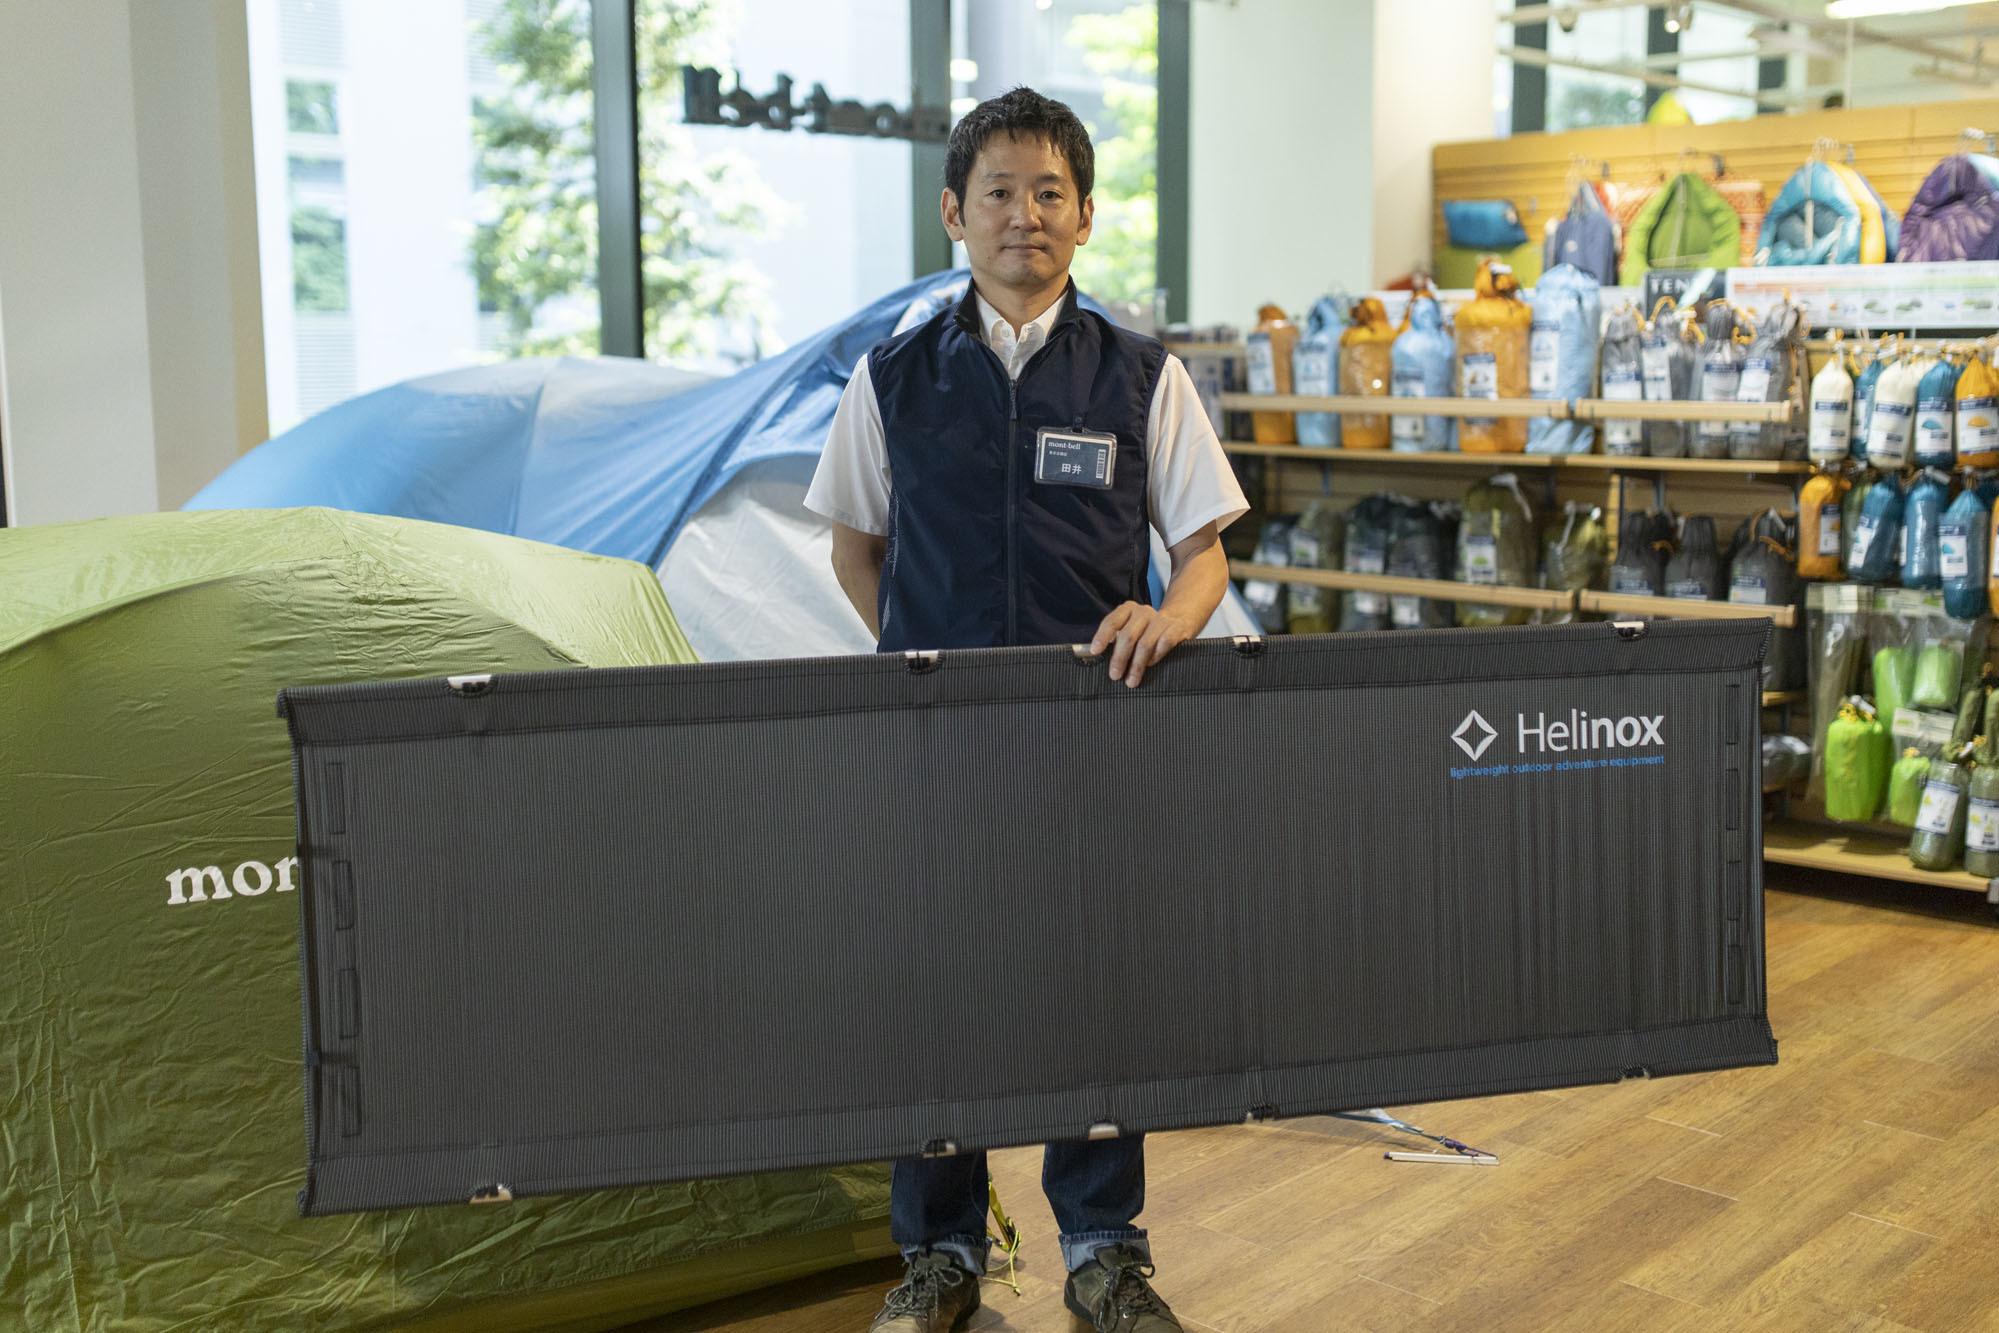 Helinoxのライトコットは1.26kgと超軽量！ 組み立ても簡単な逸品だ